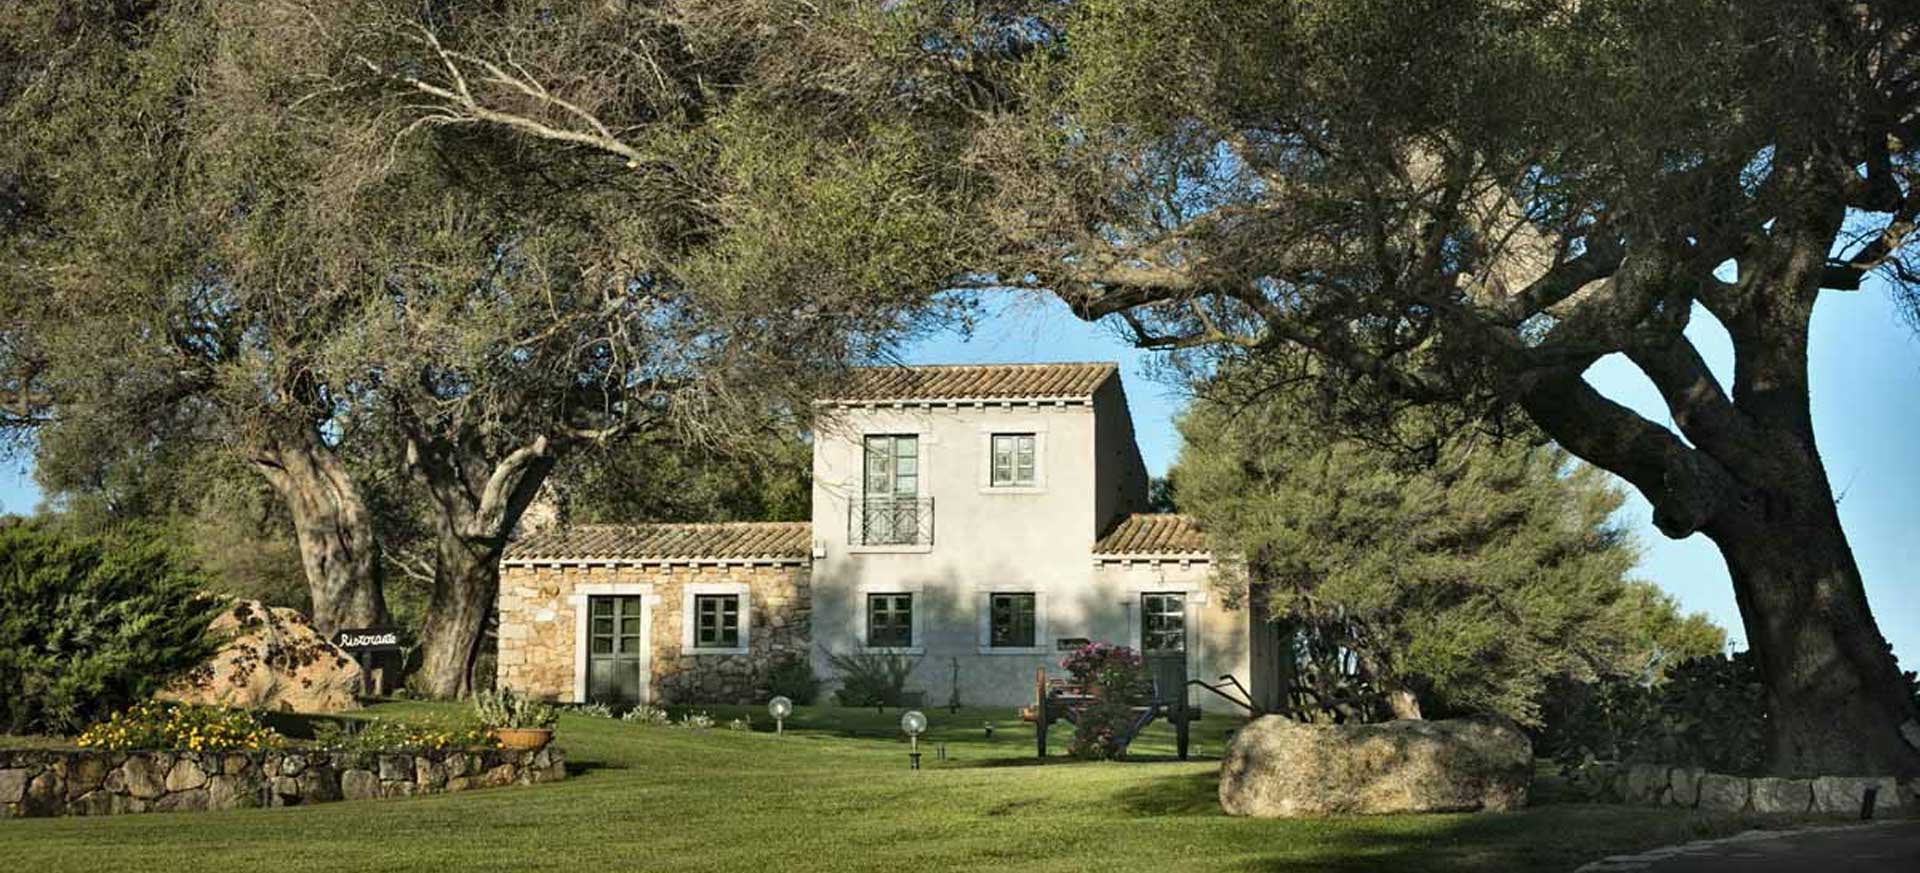 Location villa Sardaigne Arzachena - 